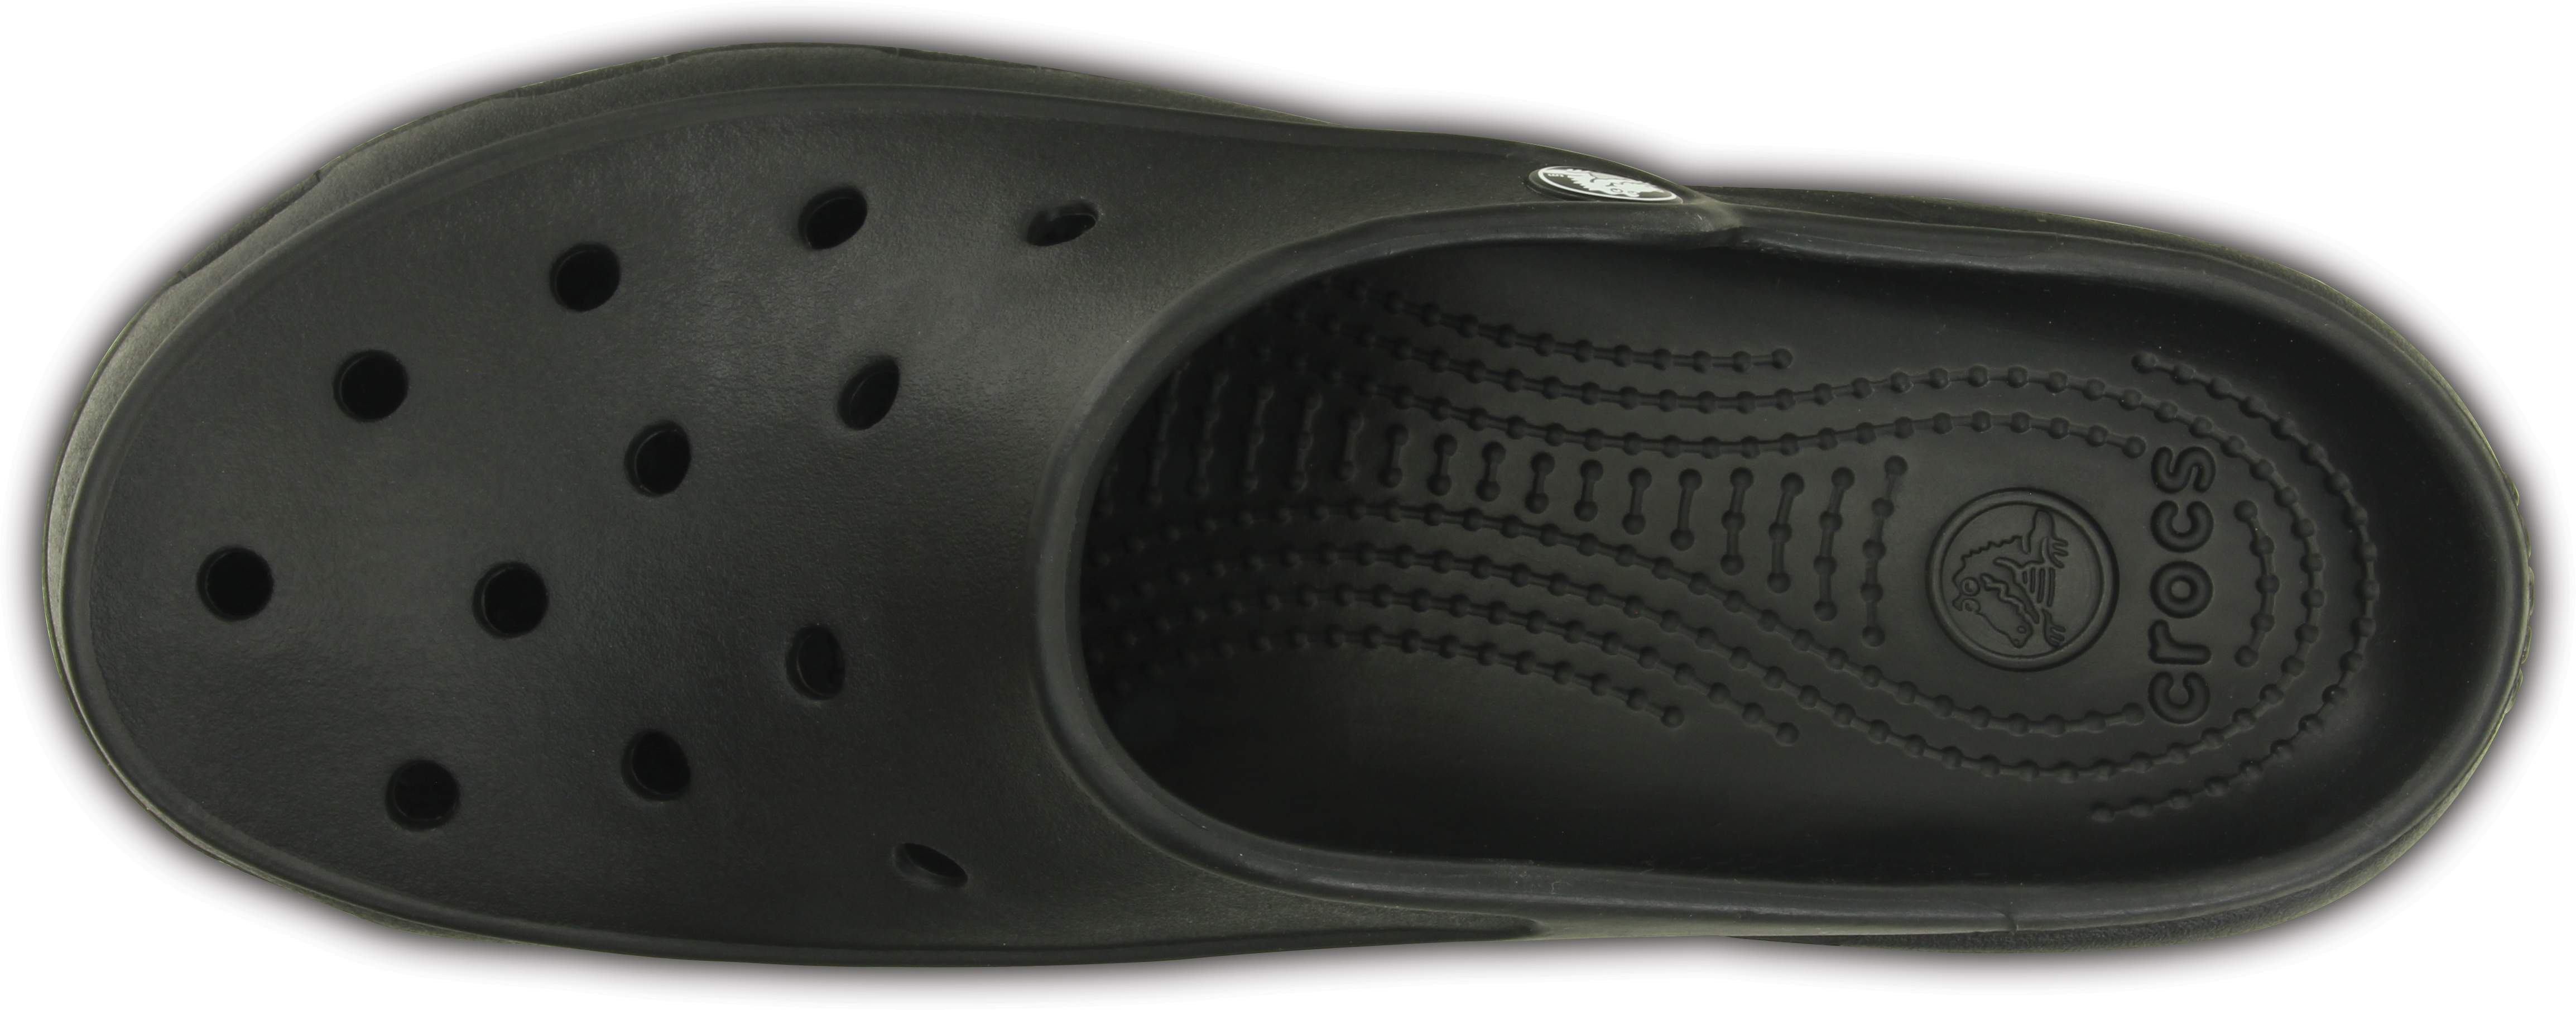 freesail crocs on sale